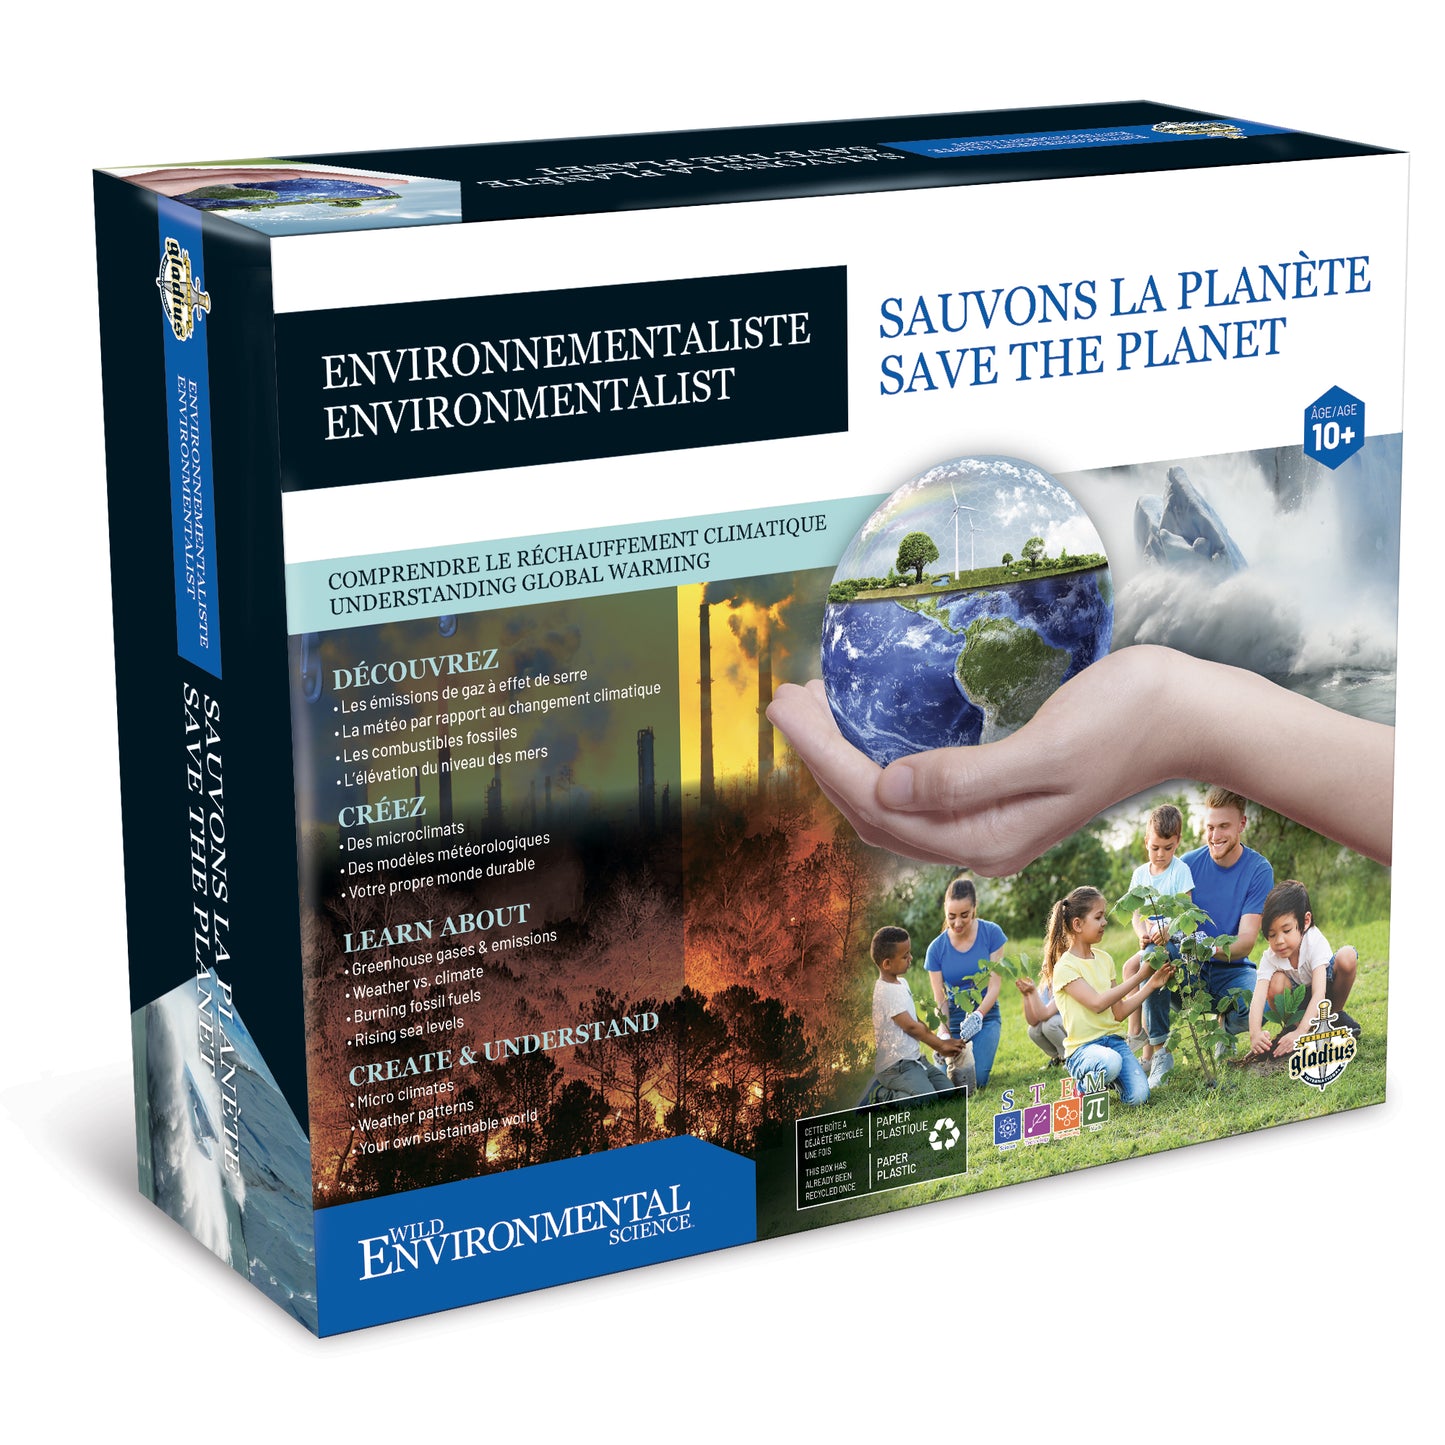 Environmentalist - Save the Planet